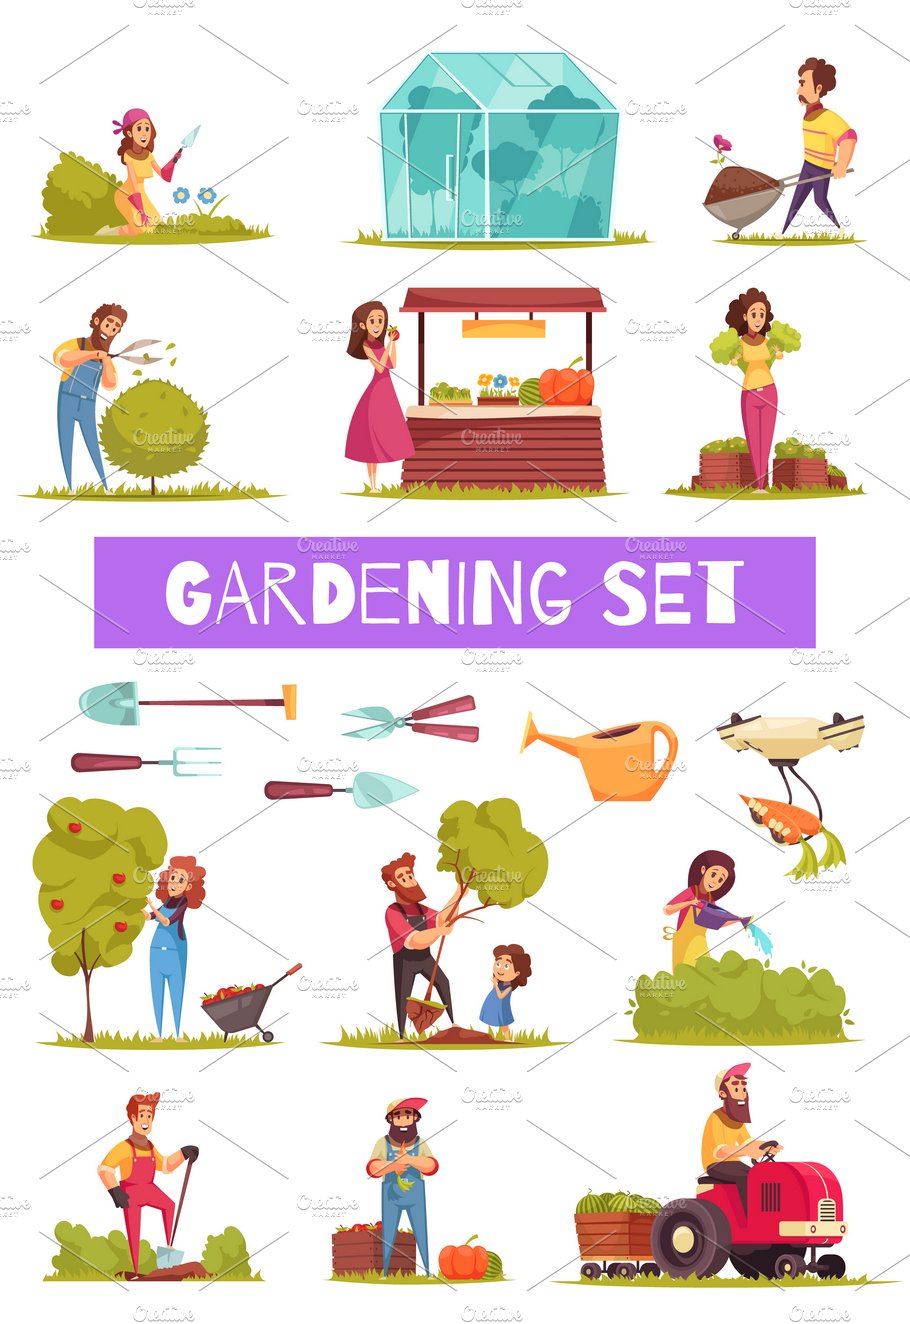 Gardening cartoon icons set cover image.